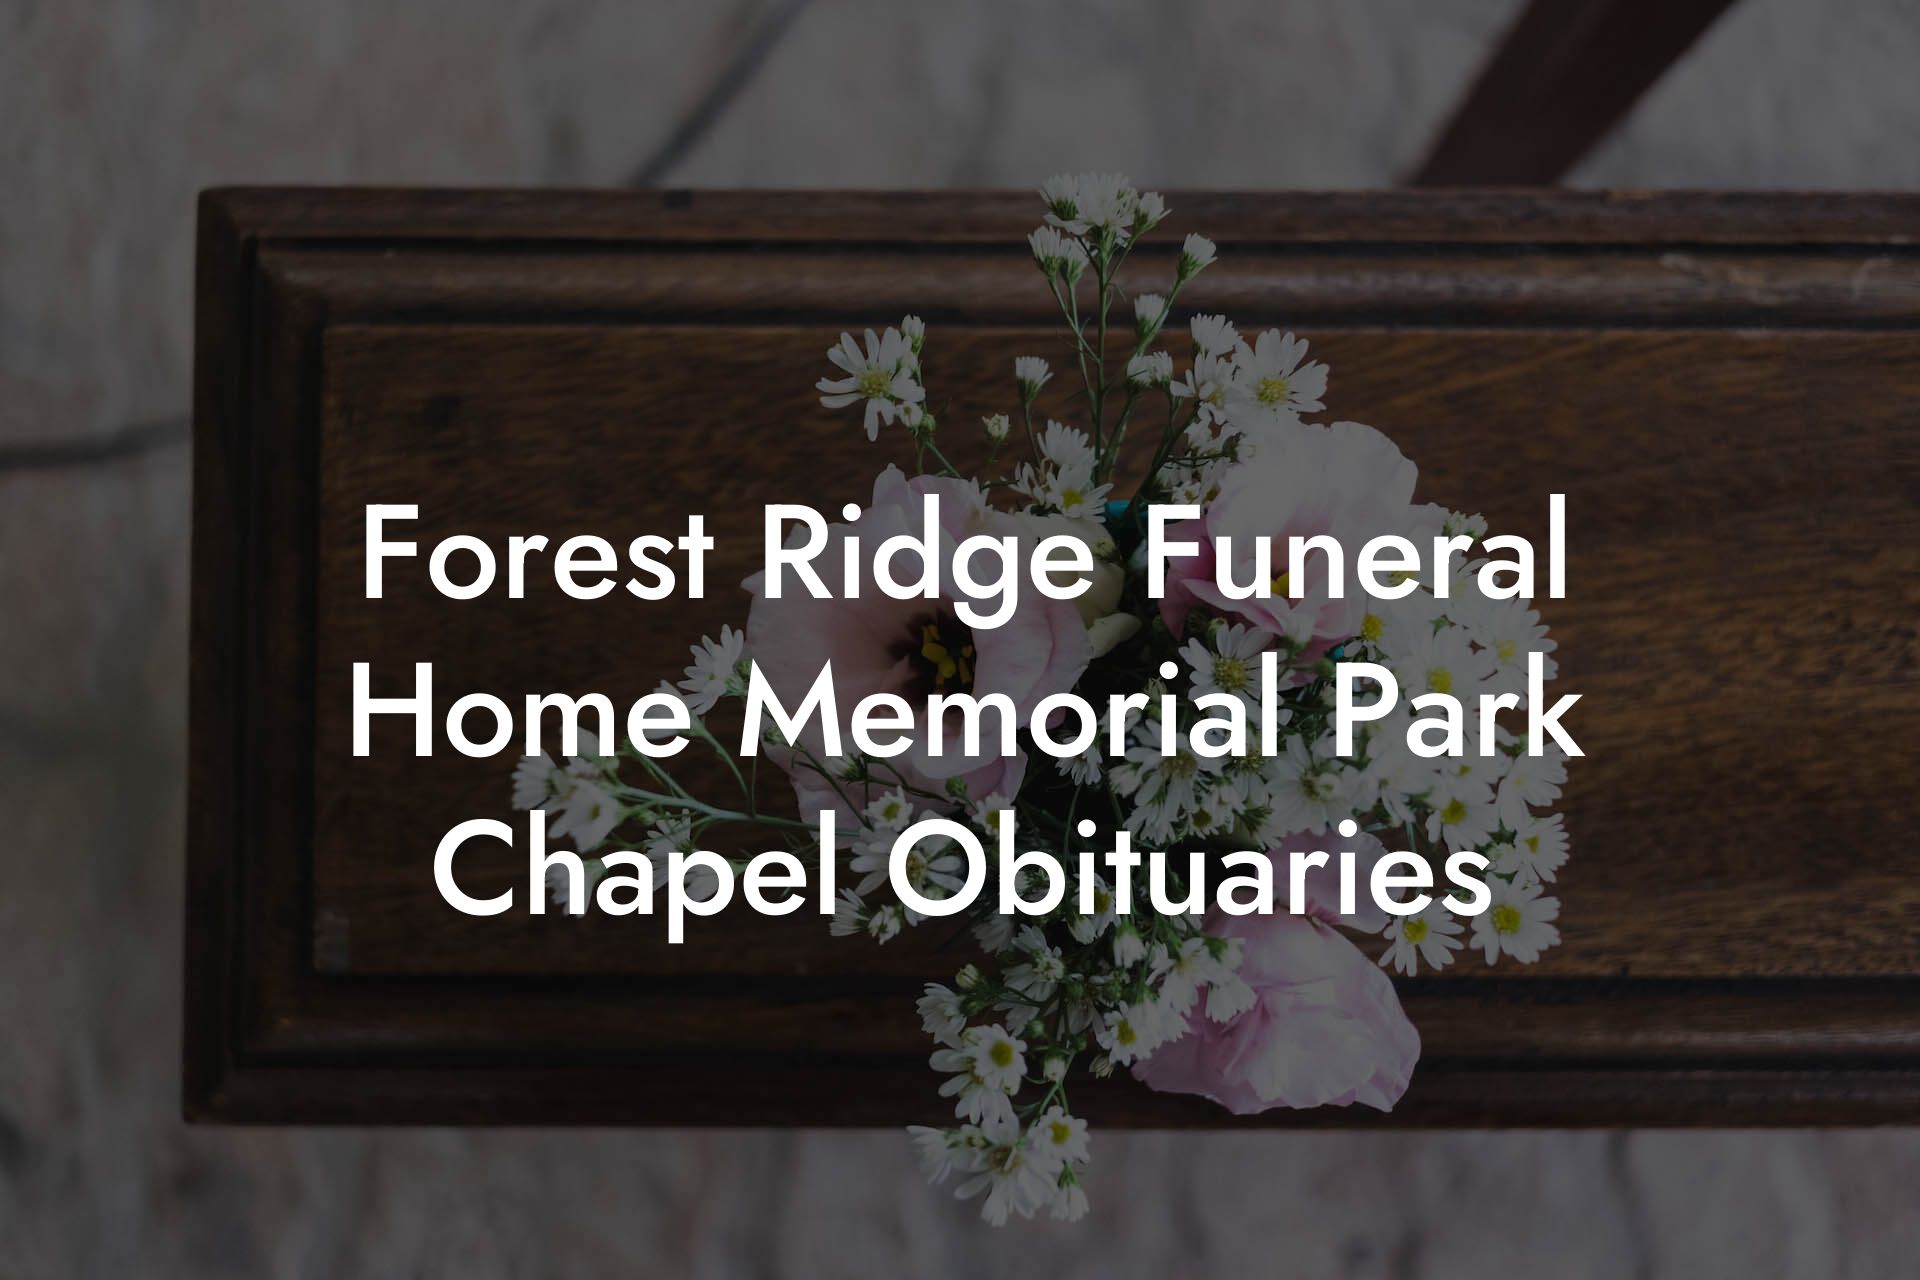 Forest Ridge Funeral Home Memorial Park Chapel Obituaries